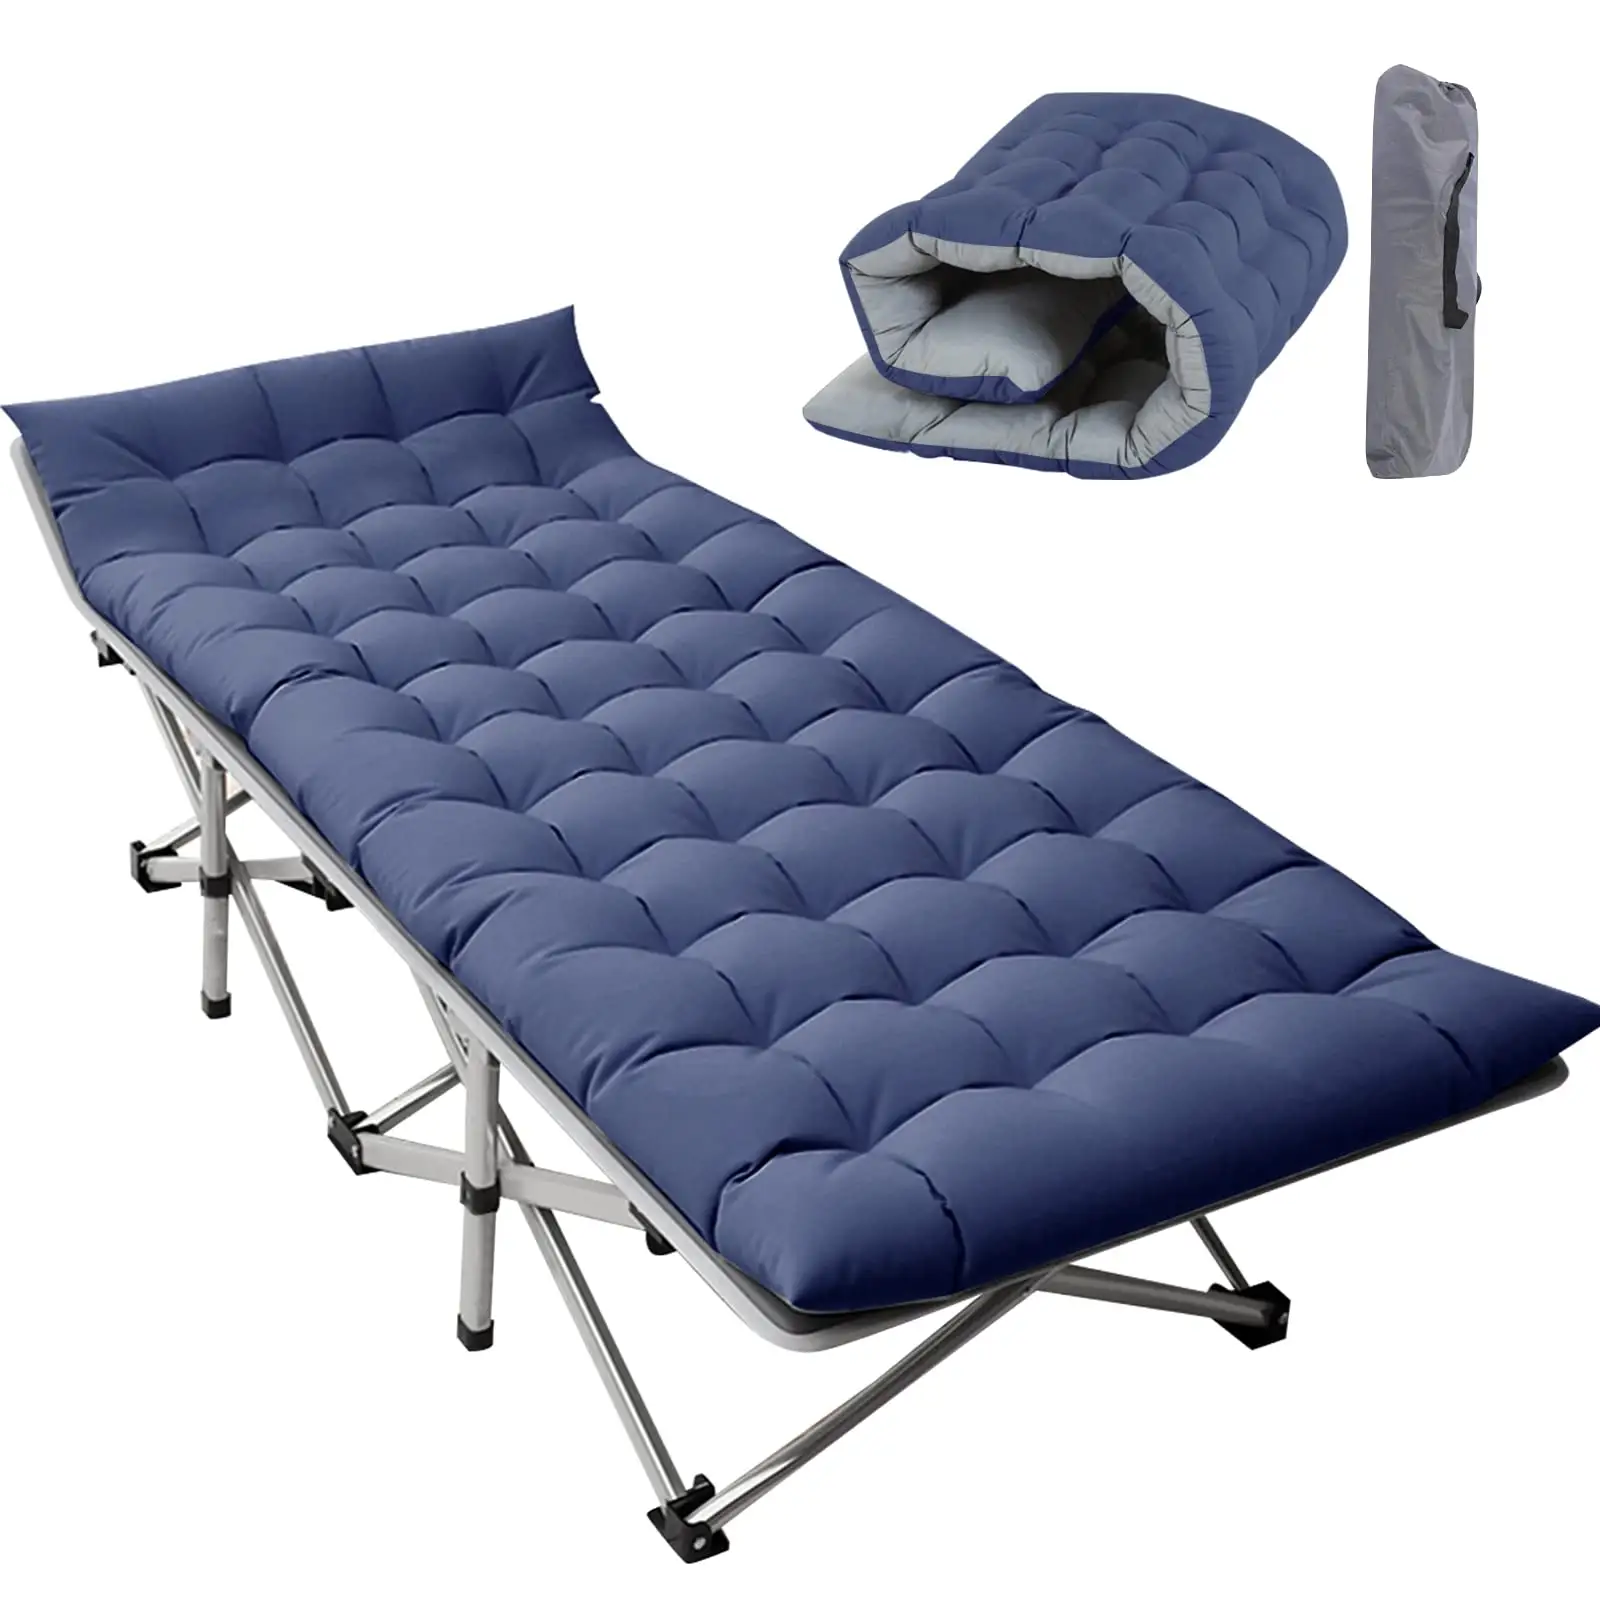 JETSHARK 캠핑 장비 금속 다기능 야외 베개 포함 휴대용 여행 접이식 조가비 캠핑 침대 접이식 침대